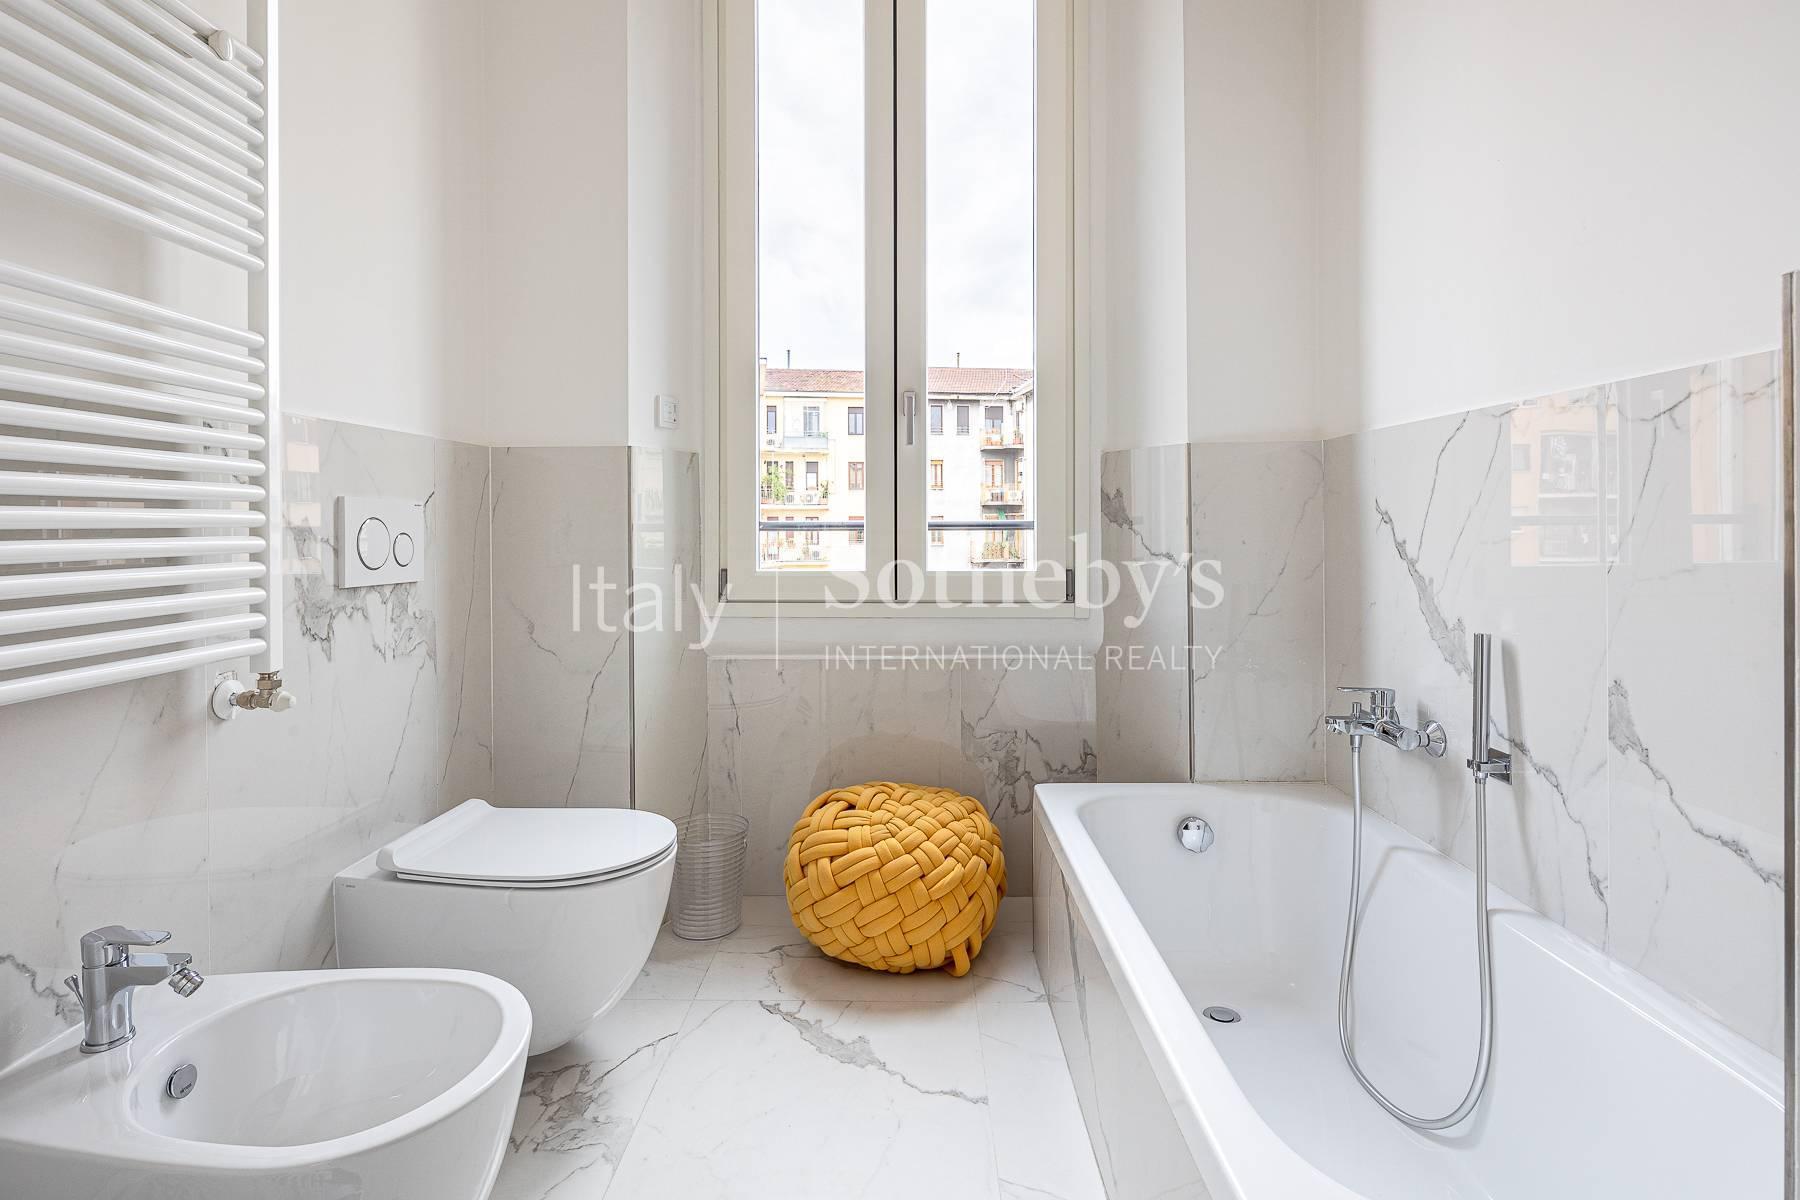 Superb furnished apartment in the Bianca di Savoia / Quadronno area - 19